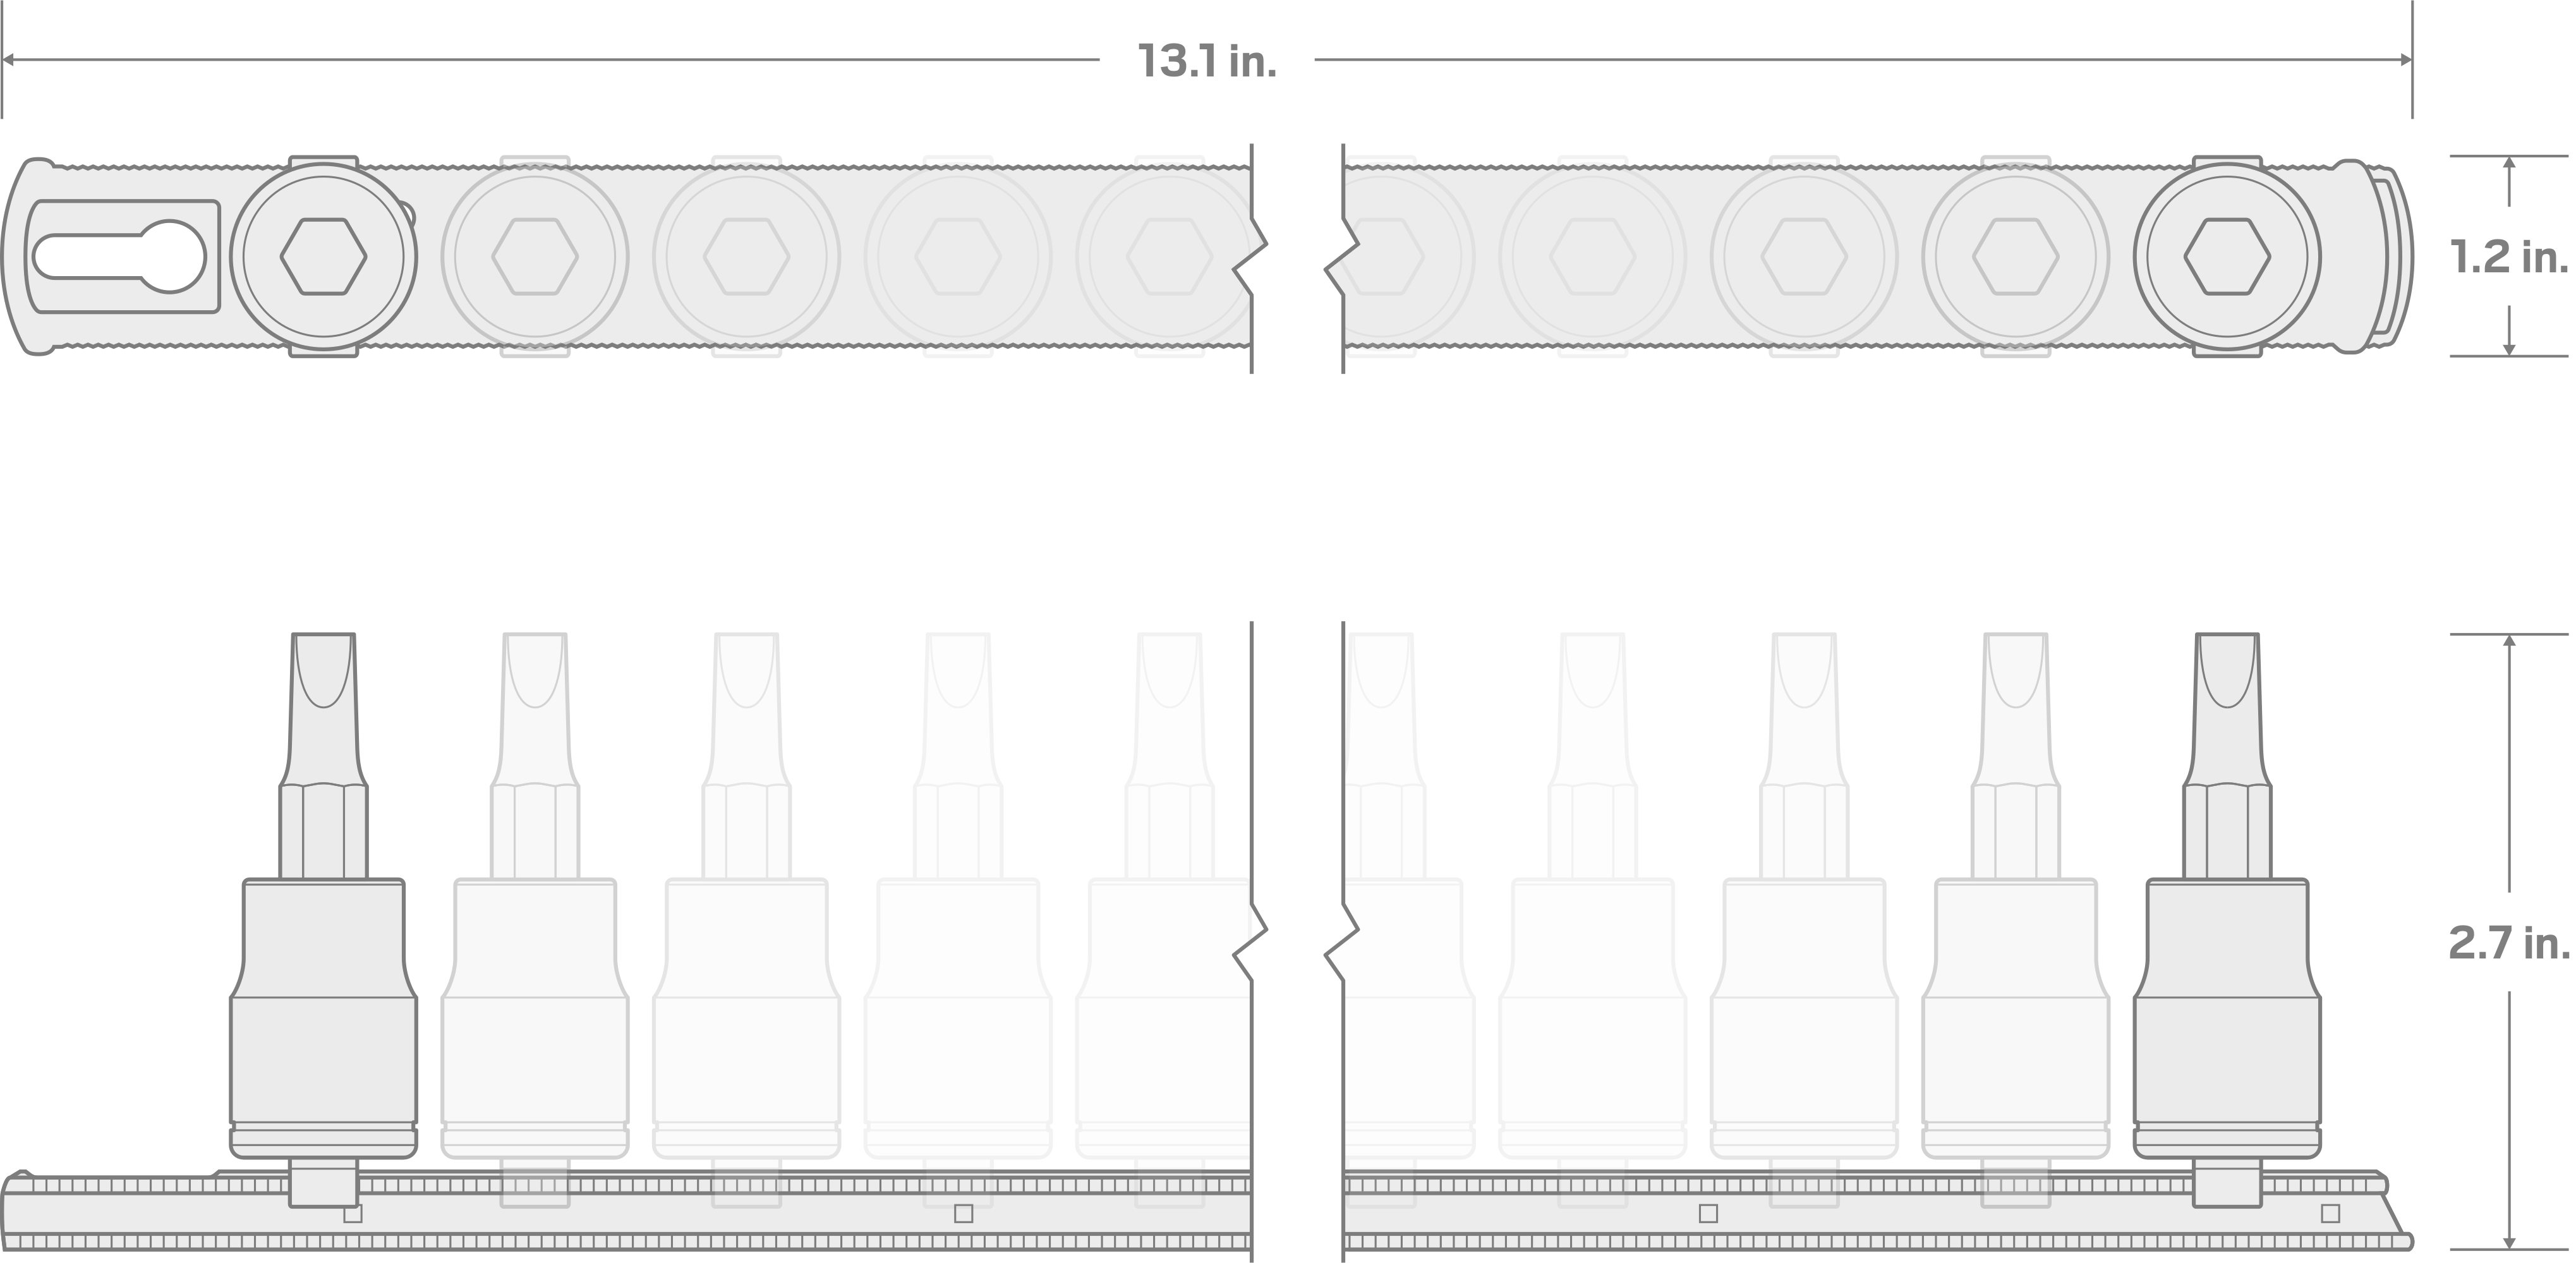 Specs for 1/2 Inch Drive Torx Bit Socket Set, 10-Piece (T20-T60) with Rail